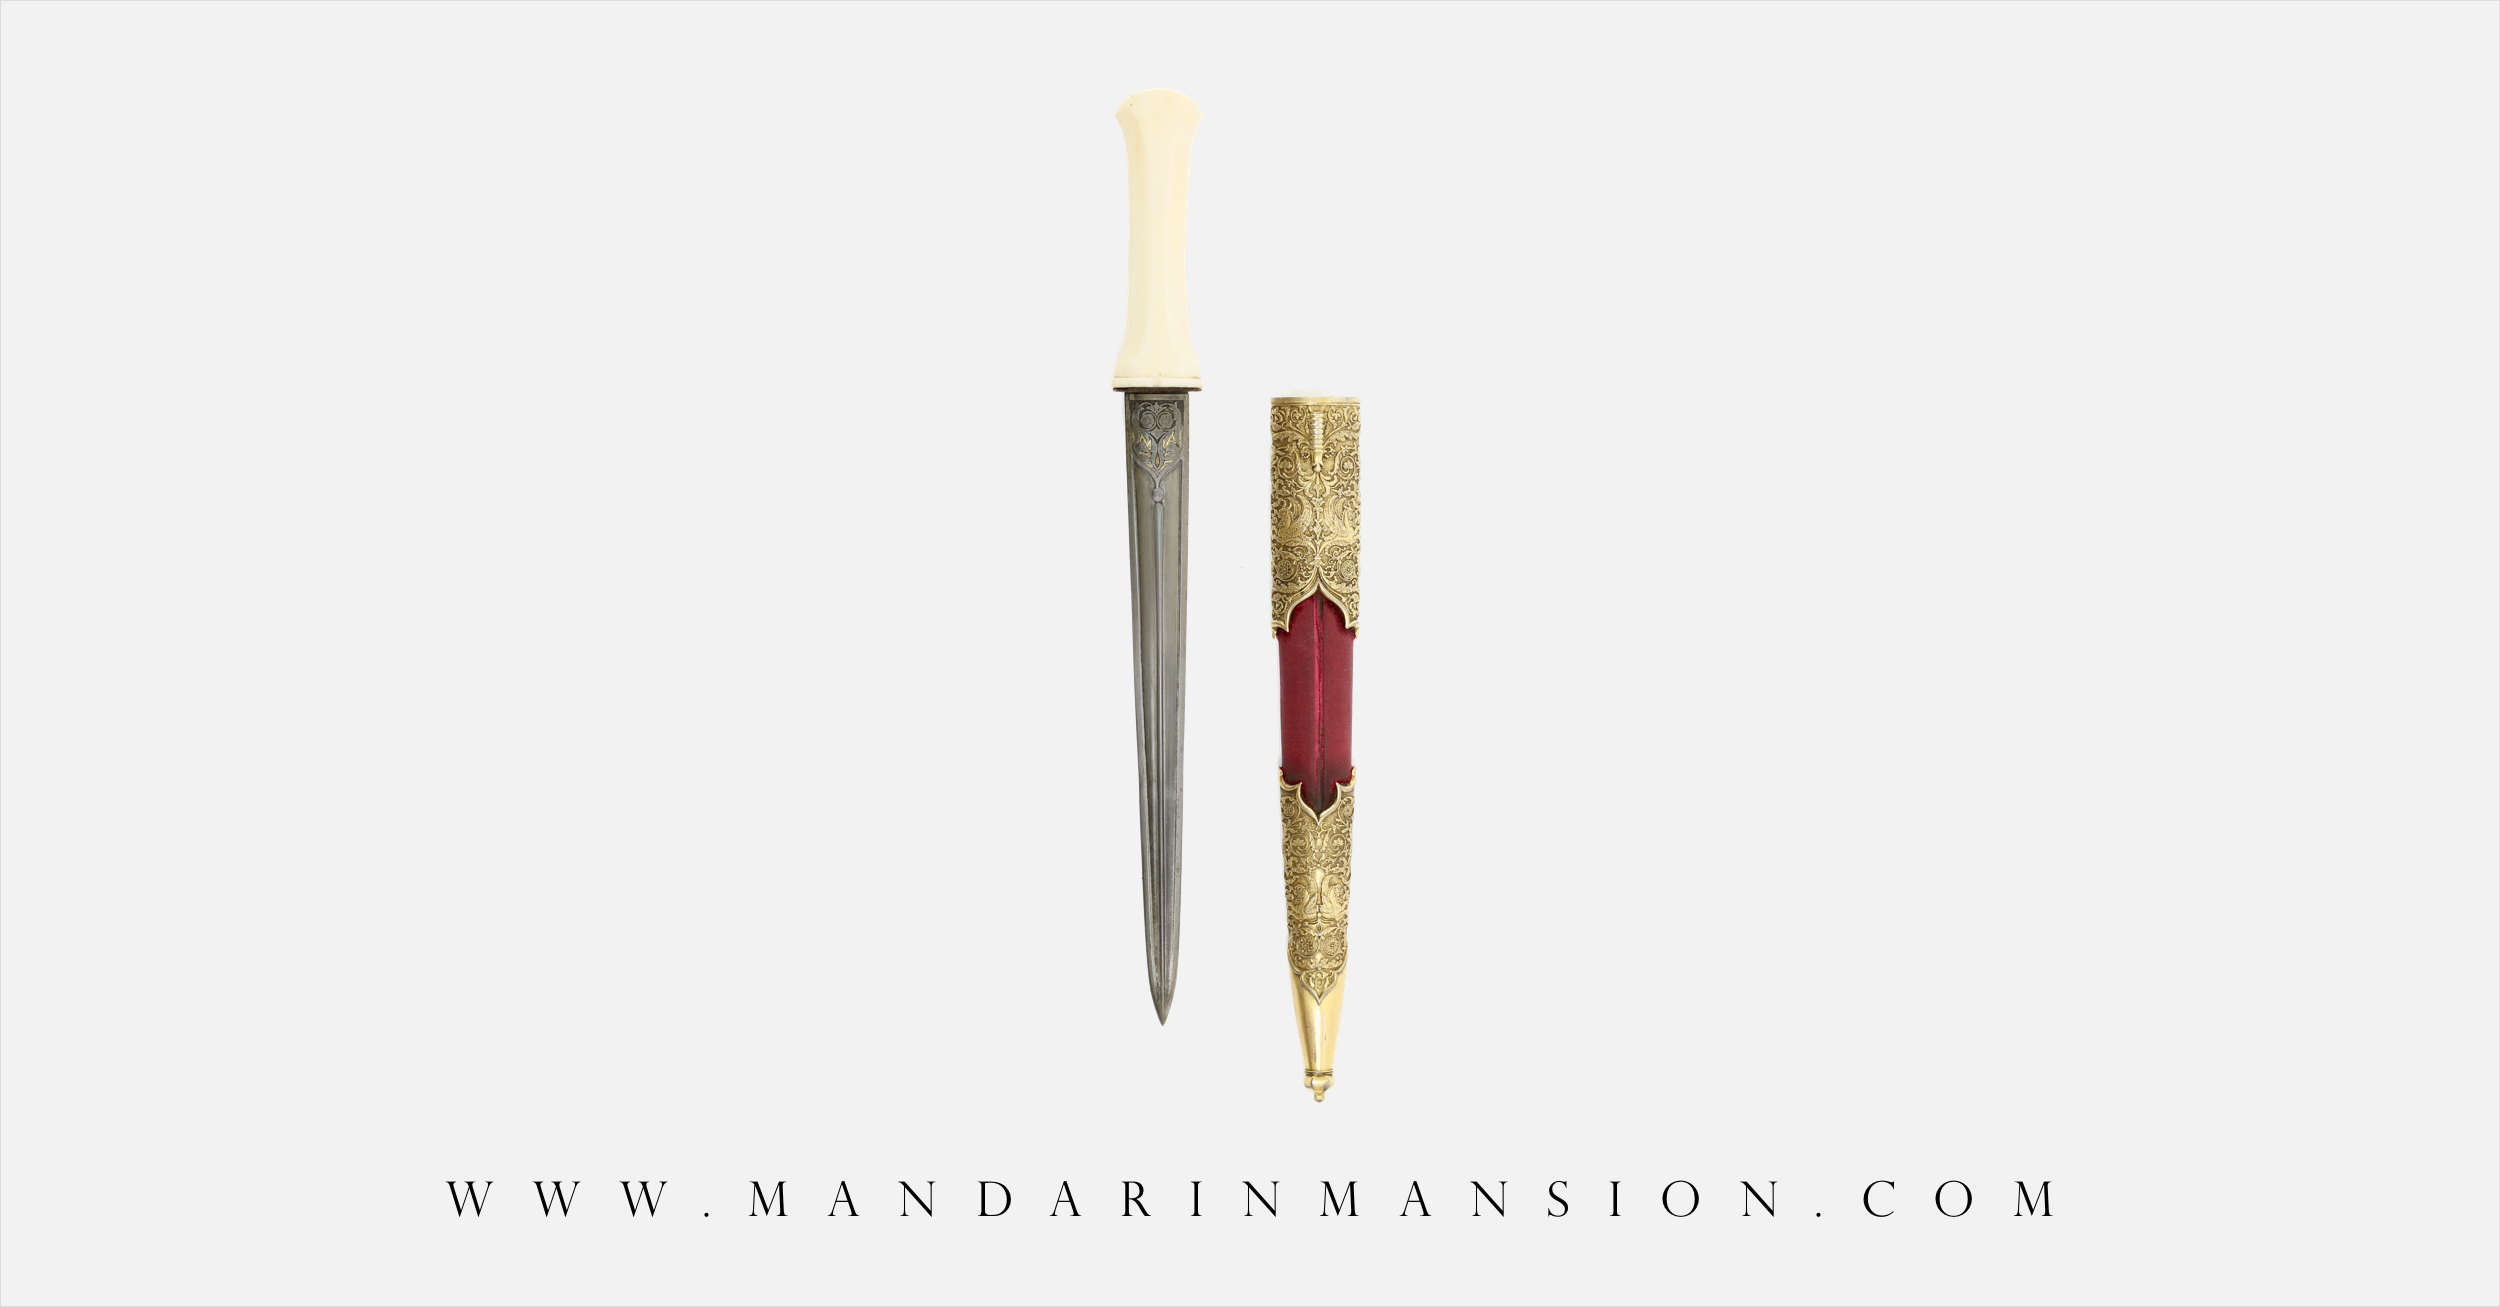 Ottoman dagger with renaissance decoration